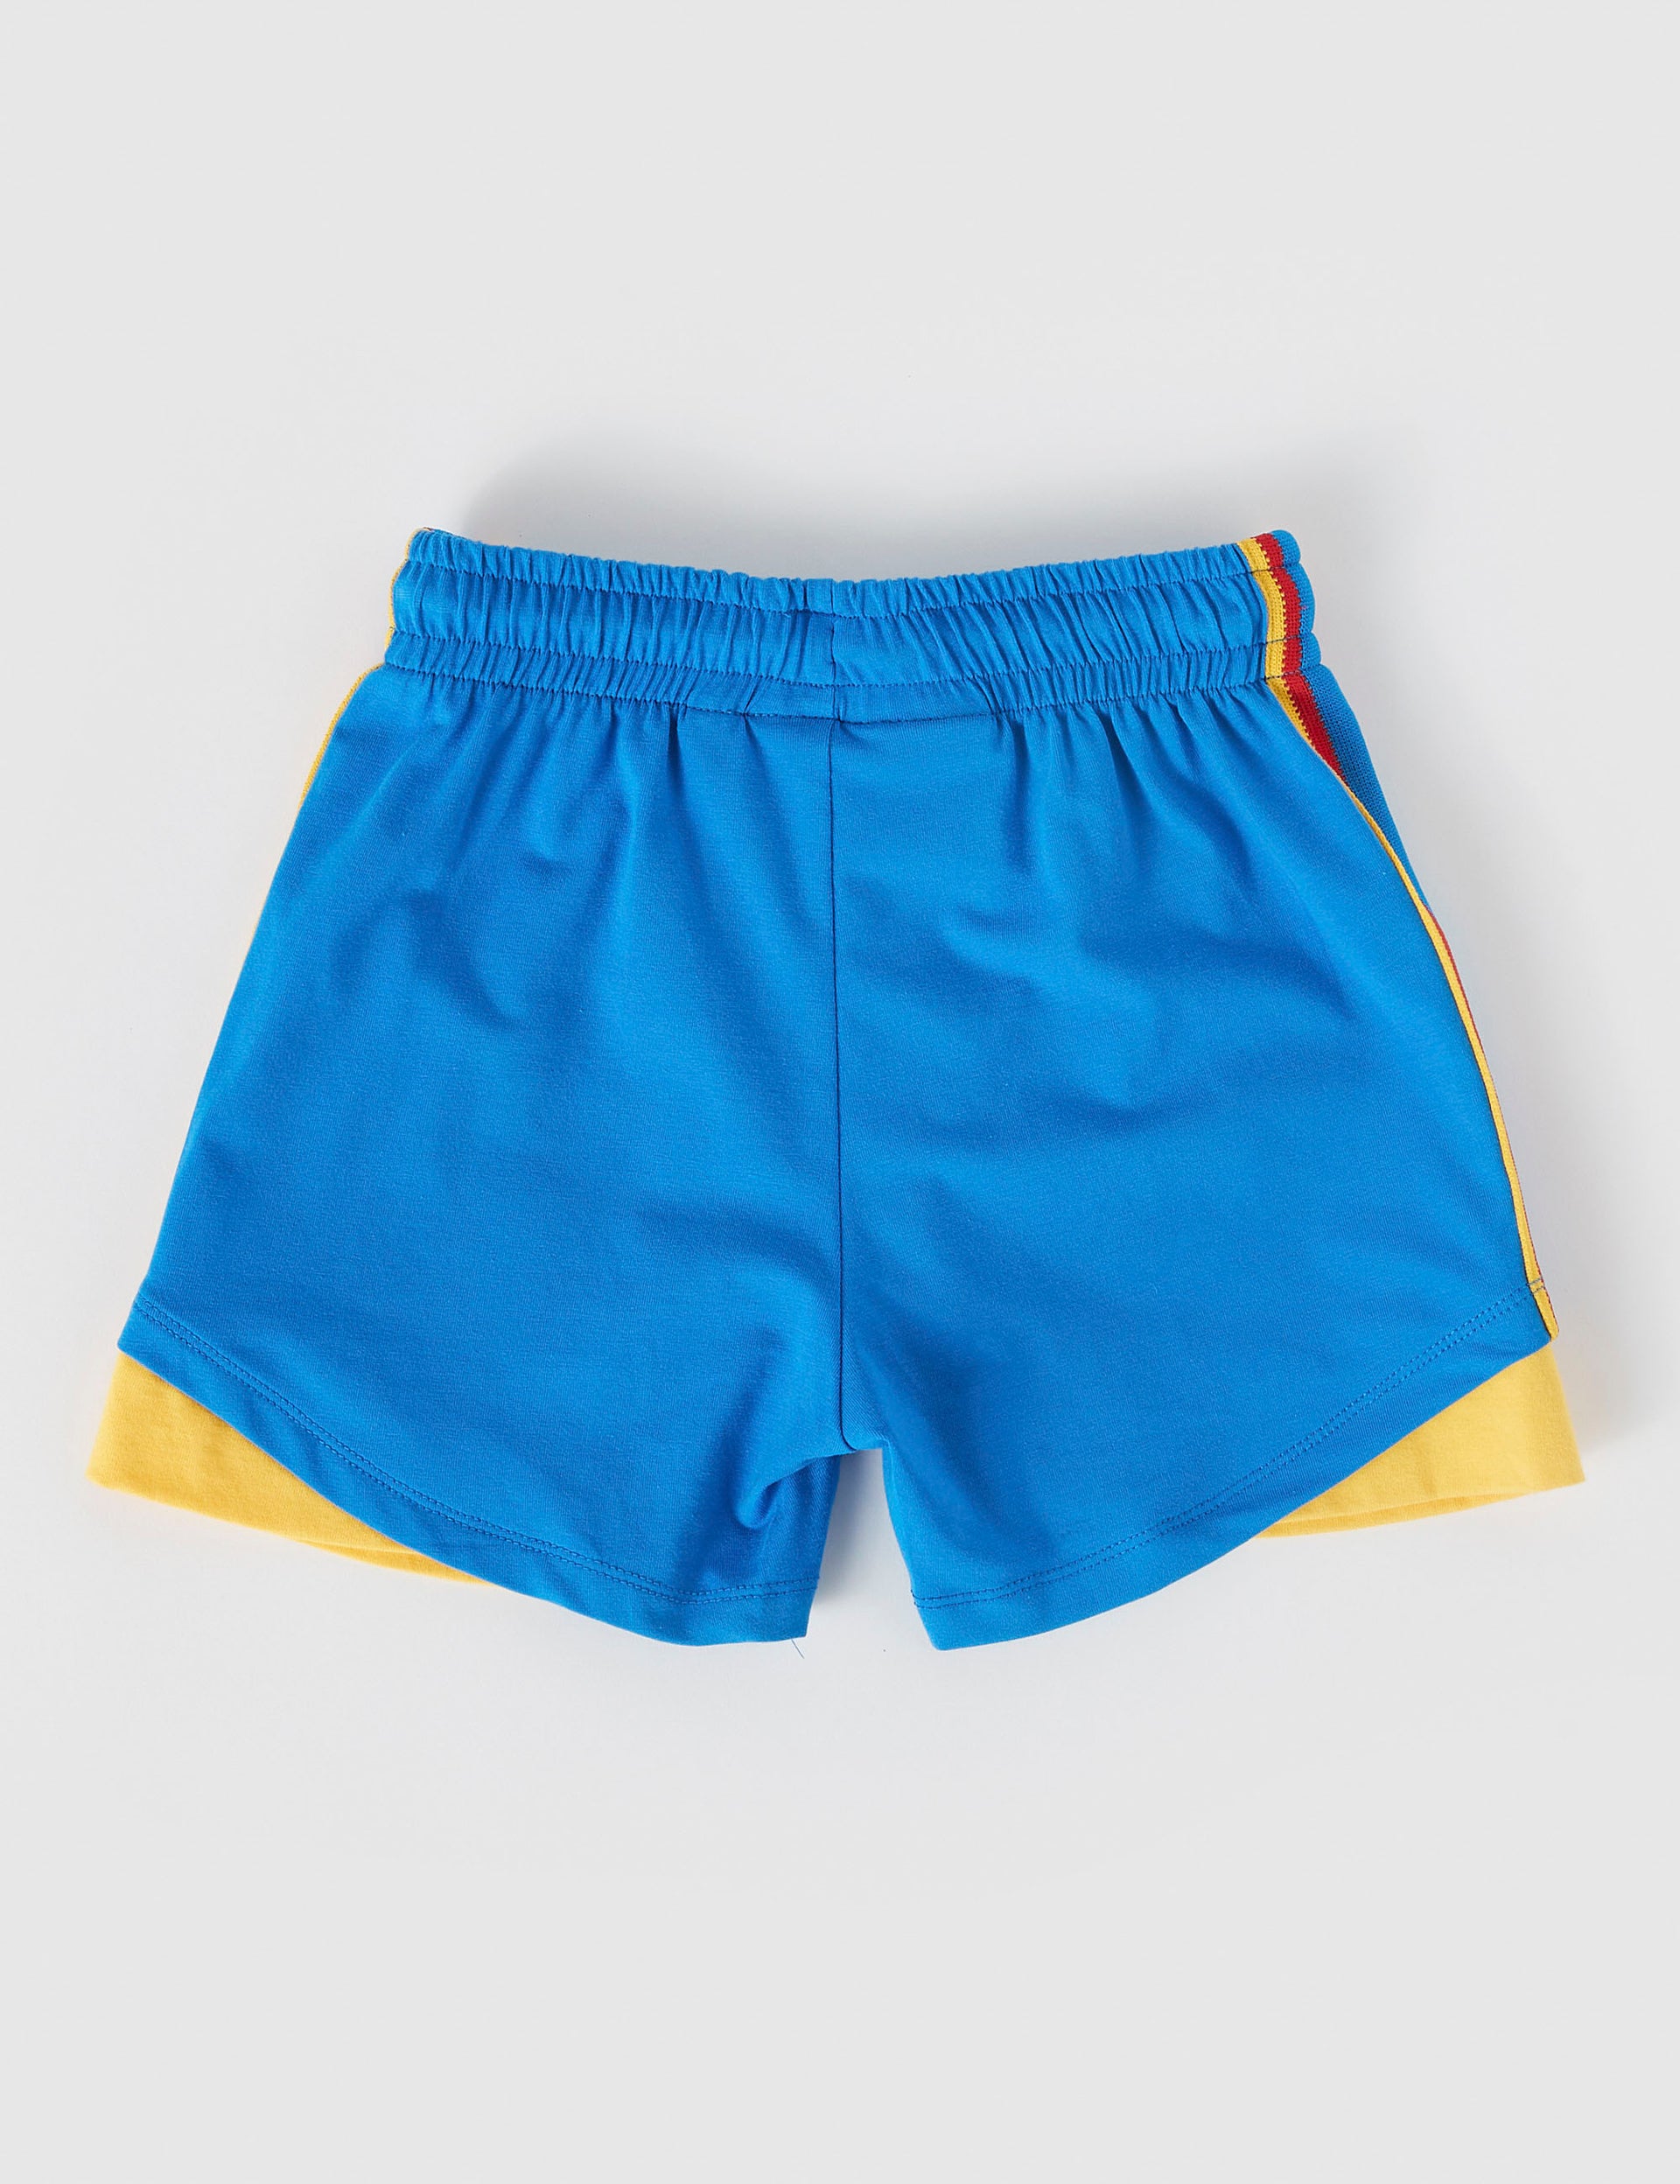 Astro Boy Sport Short Jersey Blue